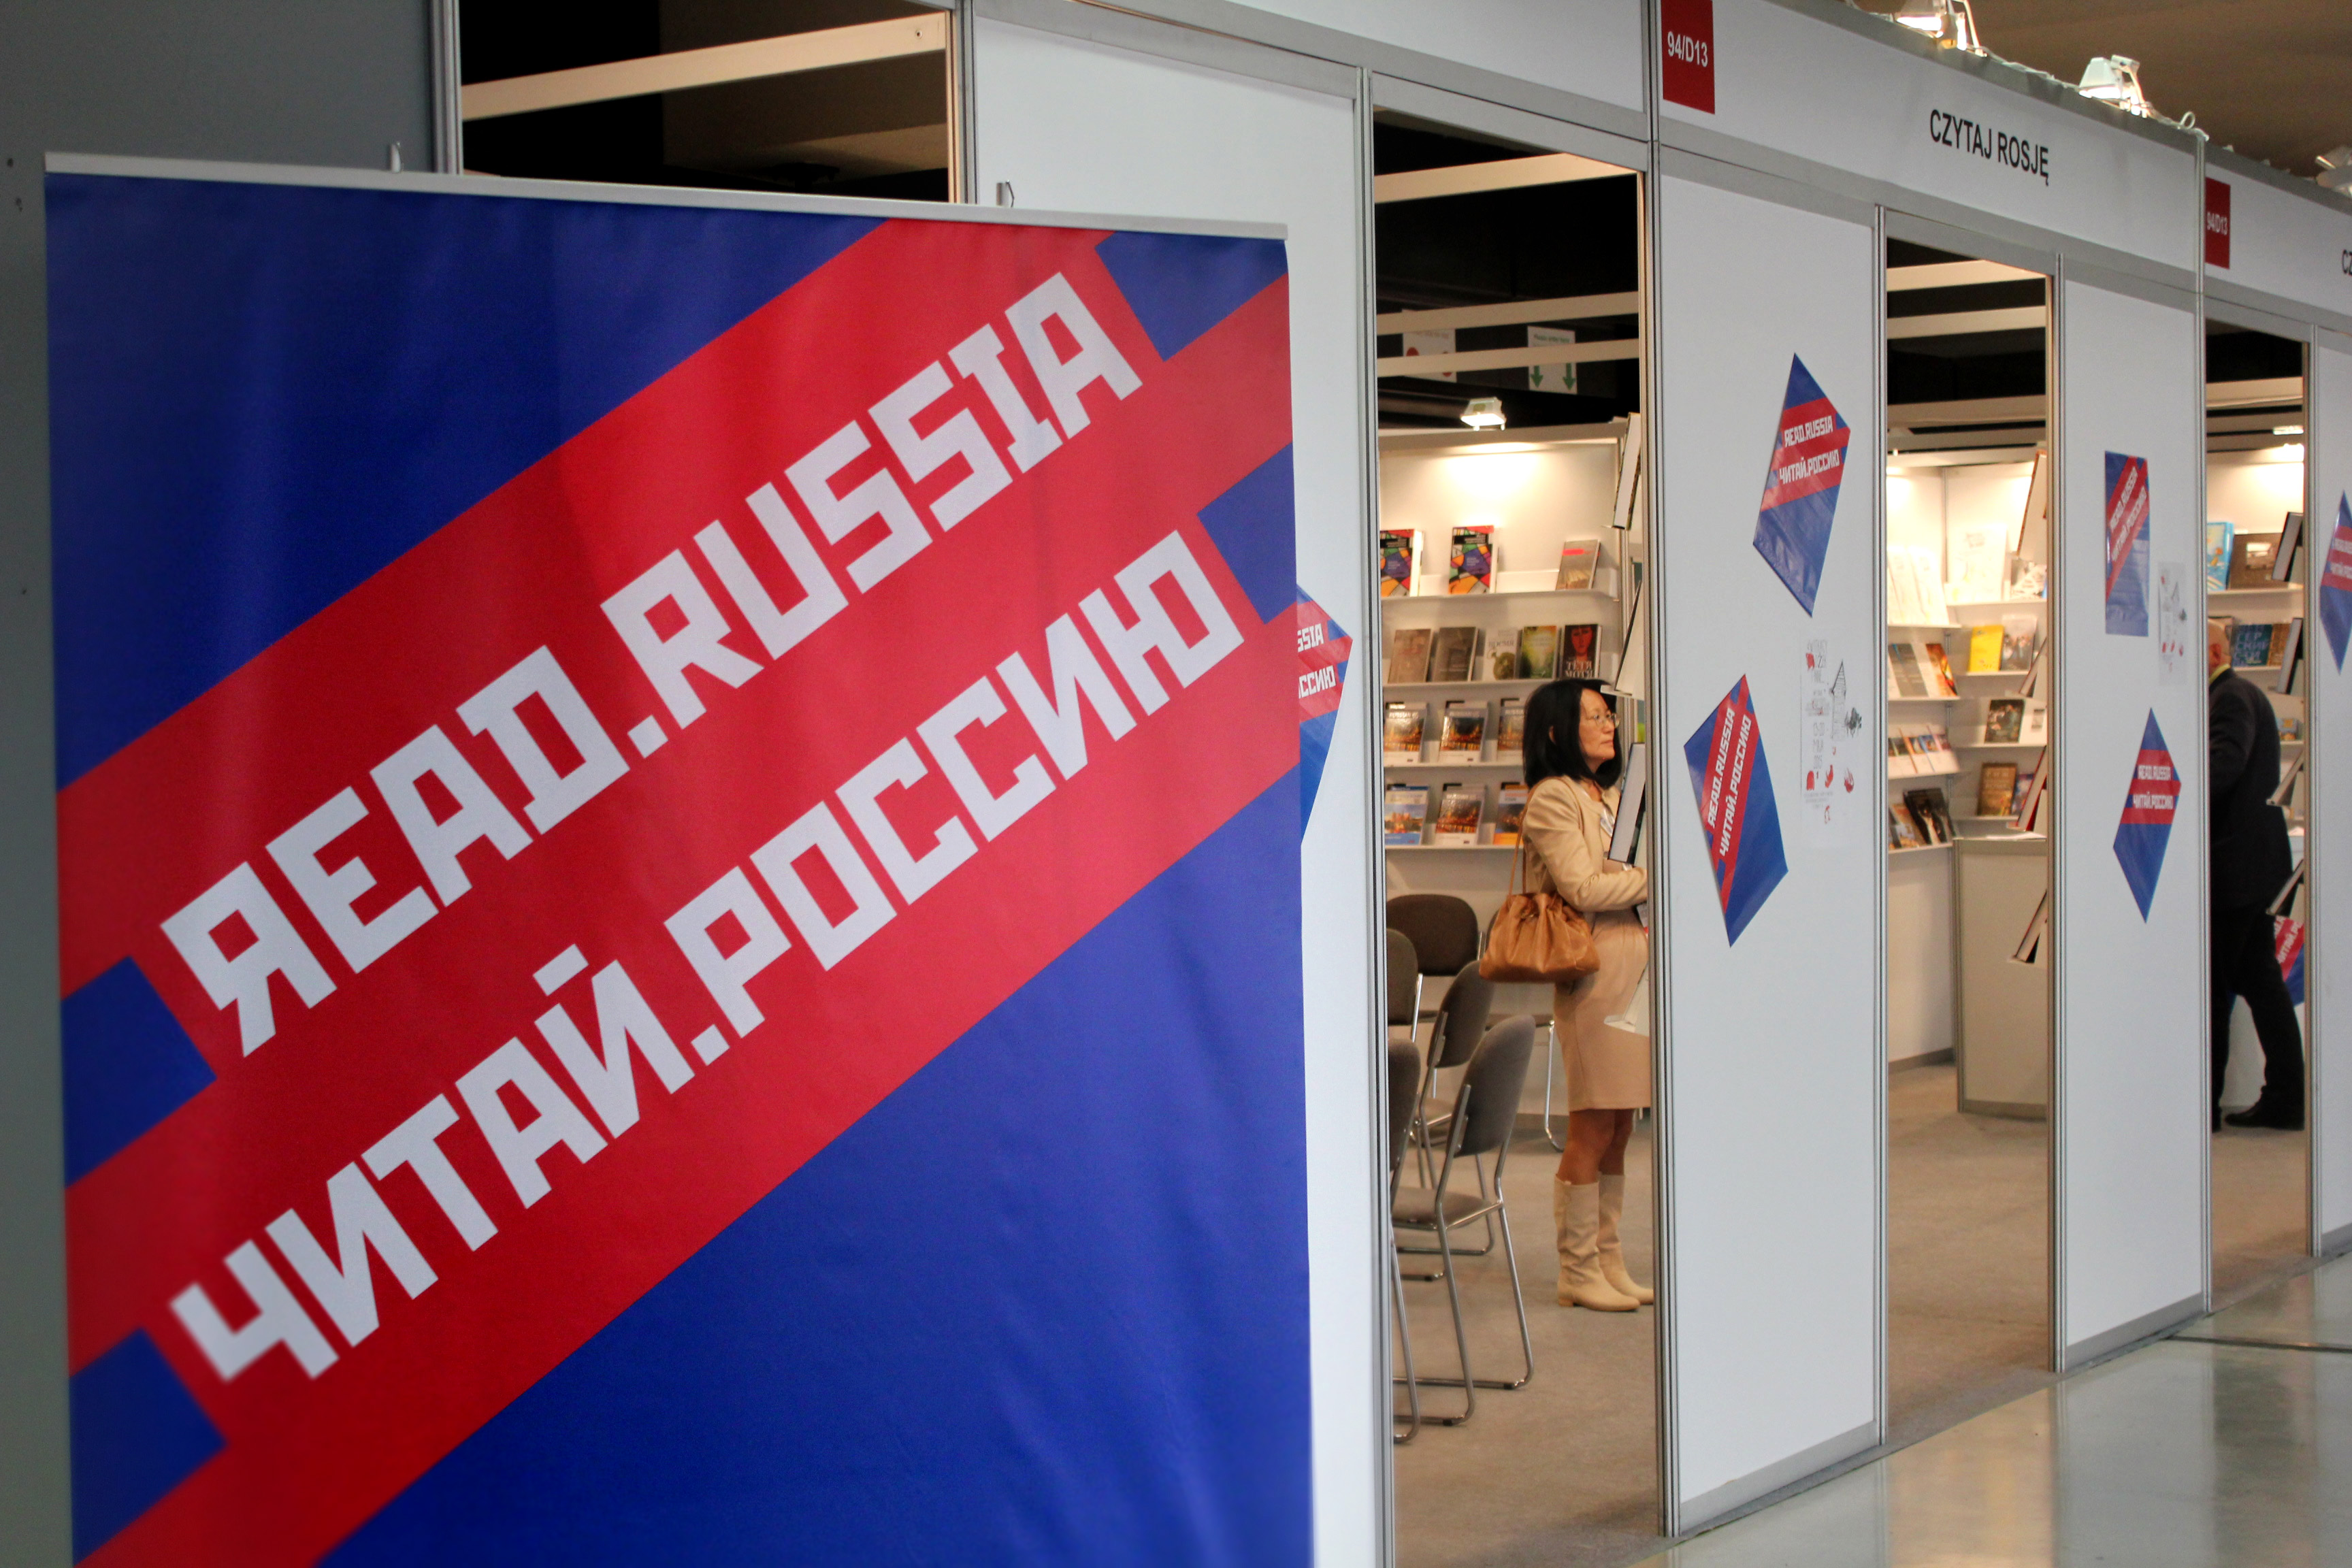 Russian stand. Проект "read Russia/читай Россию". Russia Reader.